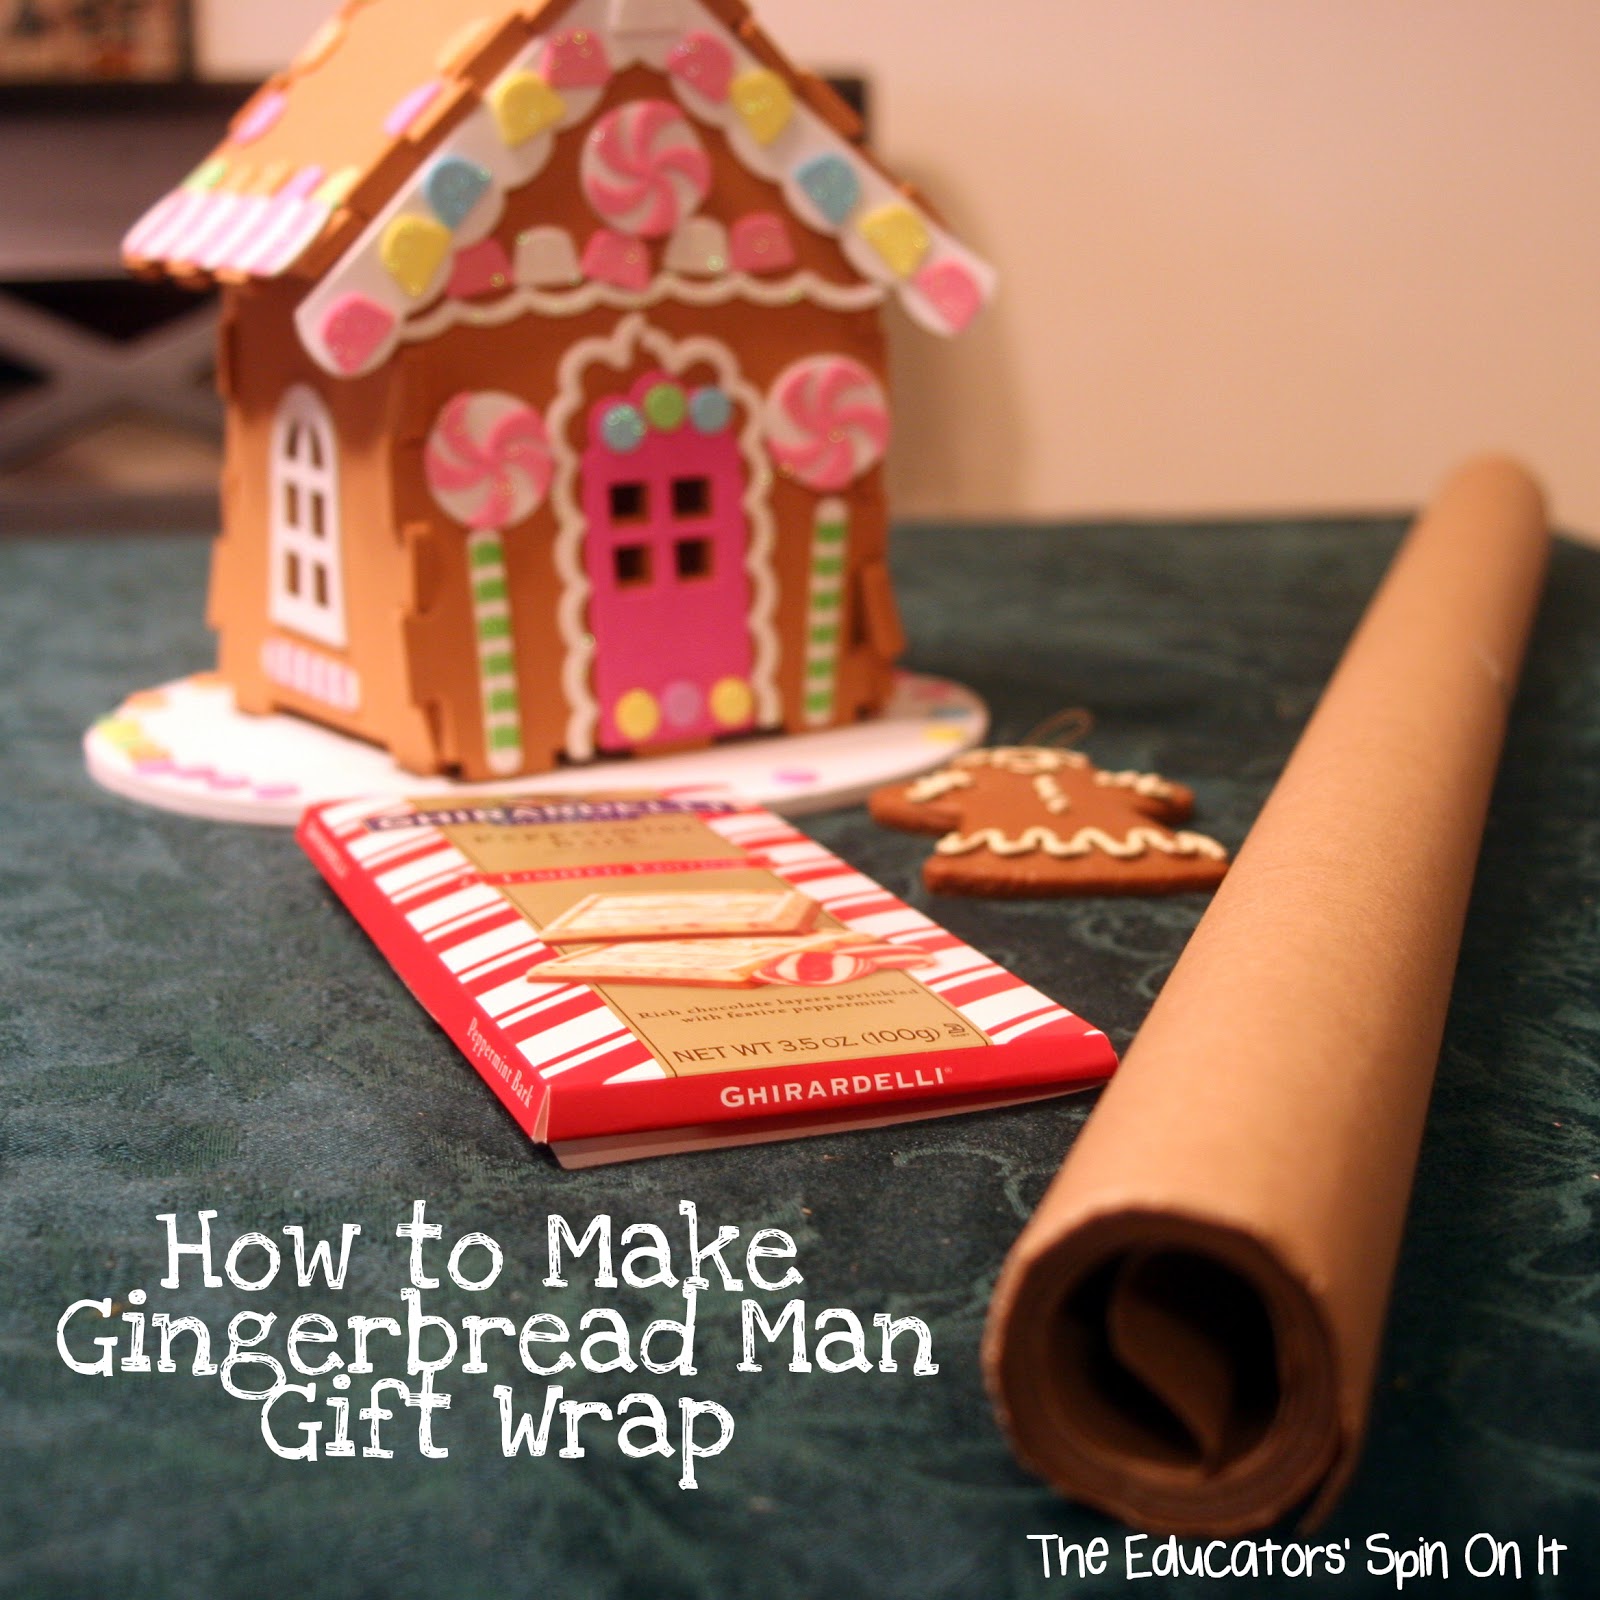 http://3.bp.blogspot.com/-IZXcXbUpAY0/UNPYEvxPOpI/AAAAAAAAM0M/Ud_pNigxV4w/s1600/How+to+make+Gingerbread+Man+Gift+Wrap.jpg